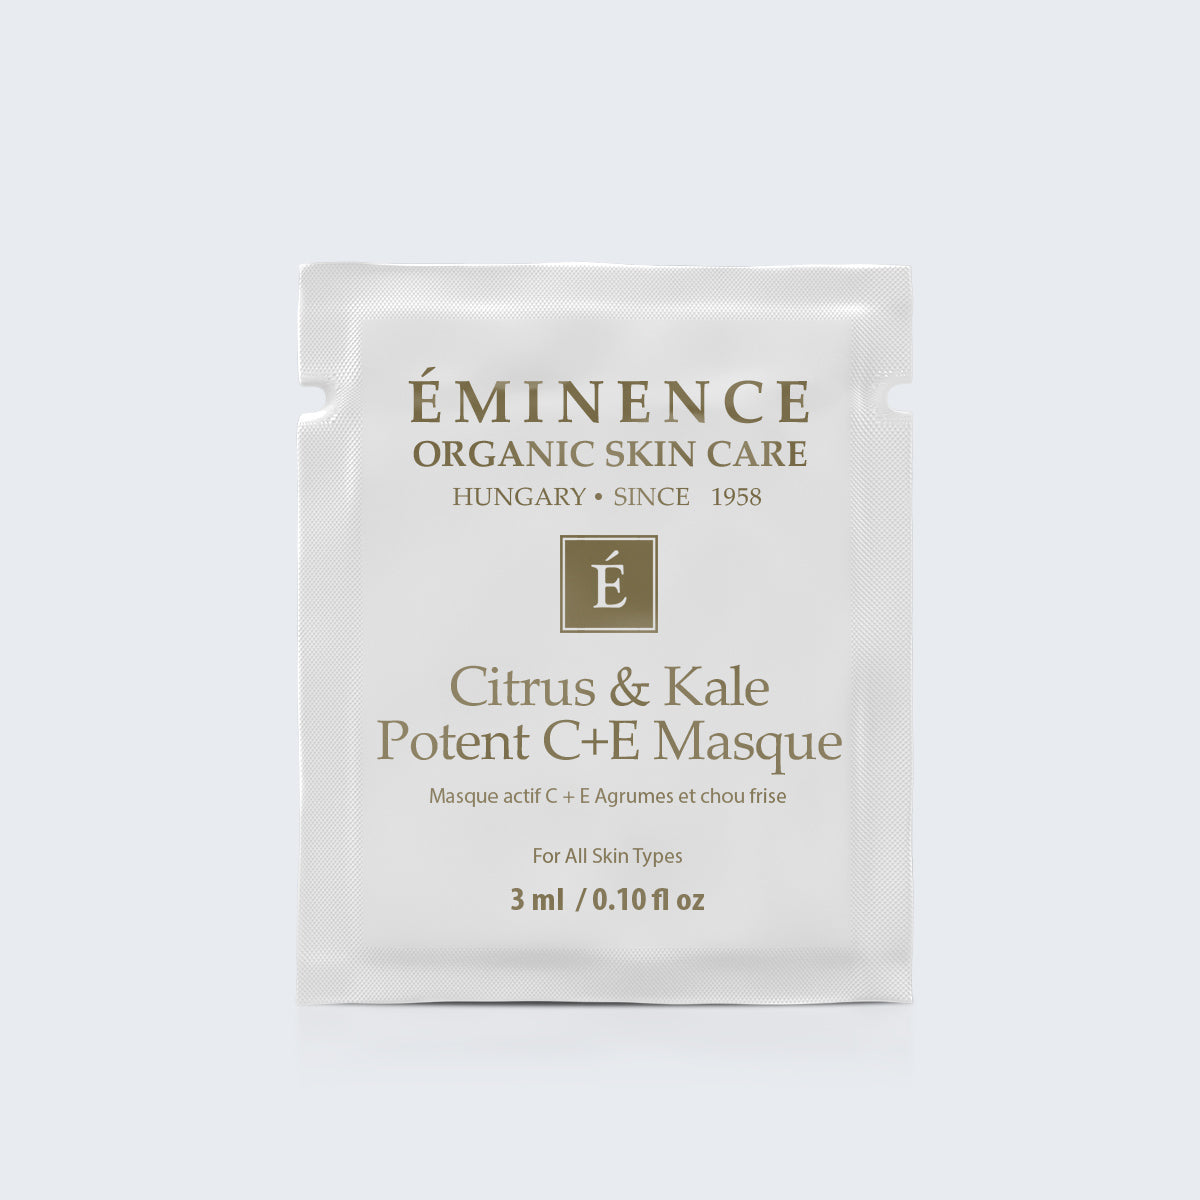 Eminence Organics Citrus & Kale Potent C + E Masque Card Sample